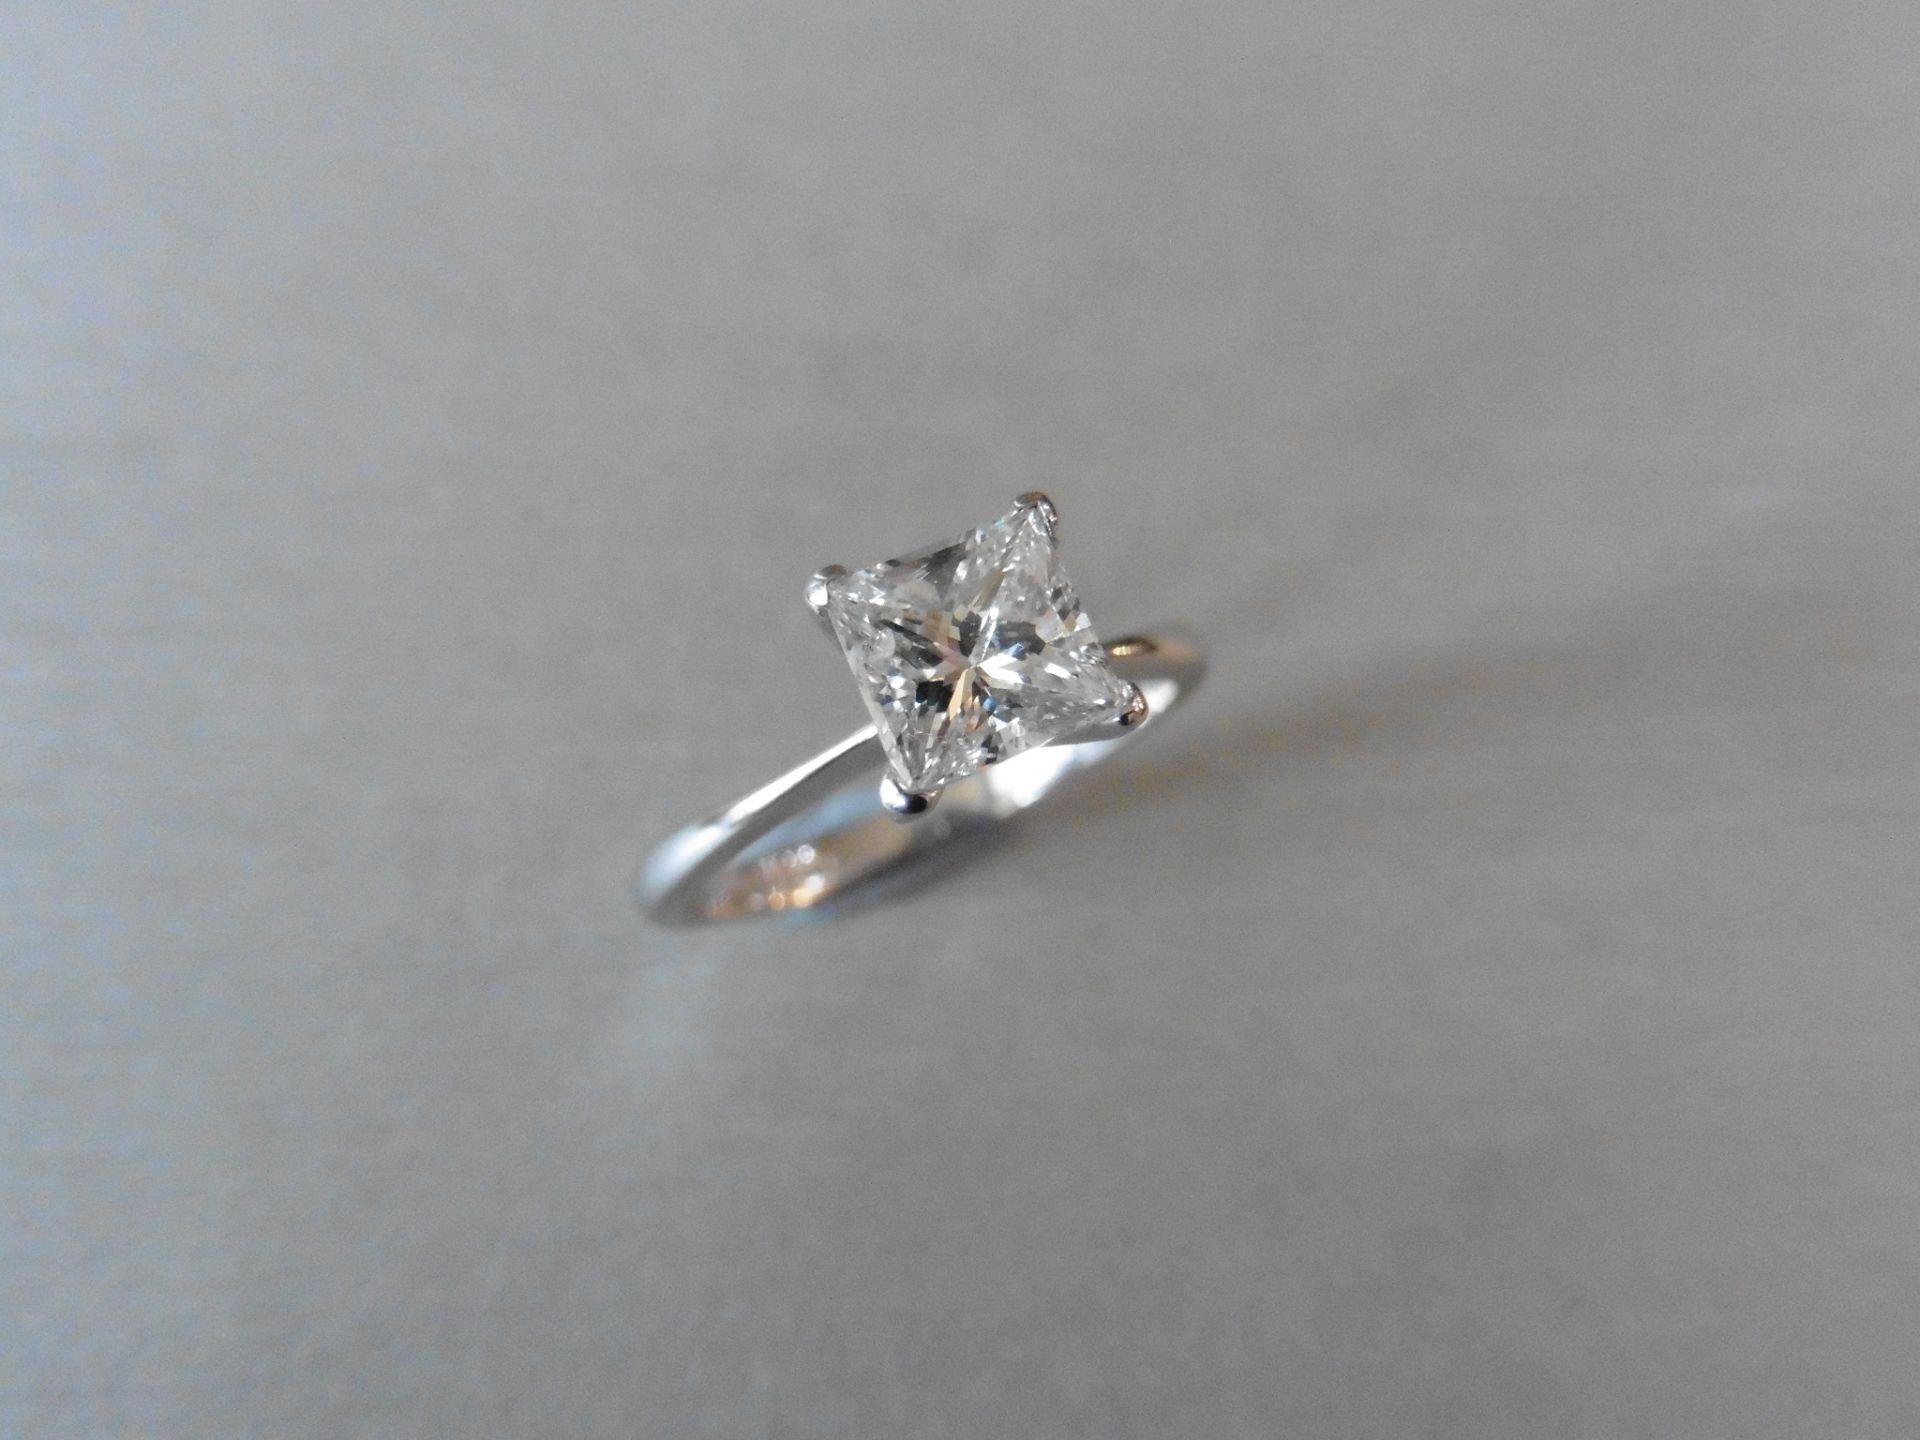 0.90ct princess cut diamond solitaire ring. H colour, si clarity. This diamond has been enhanced.